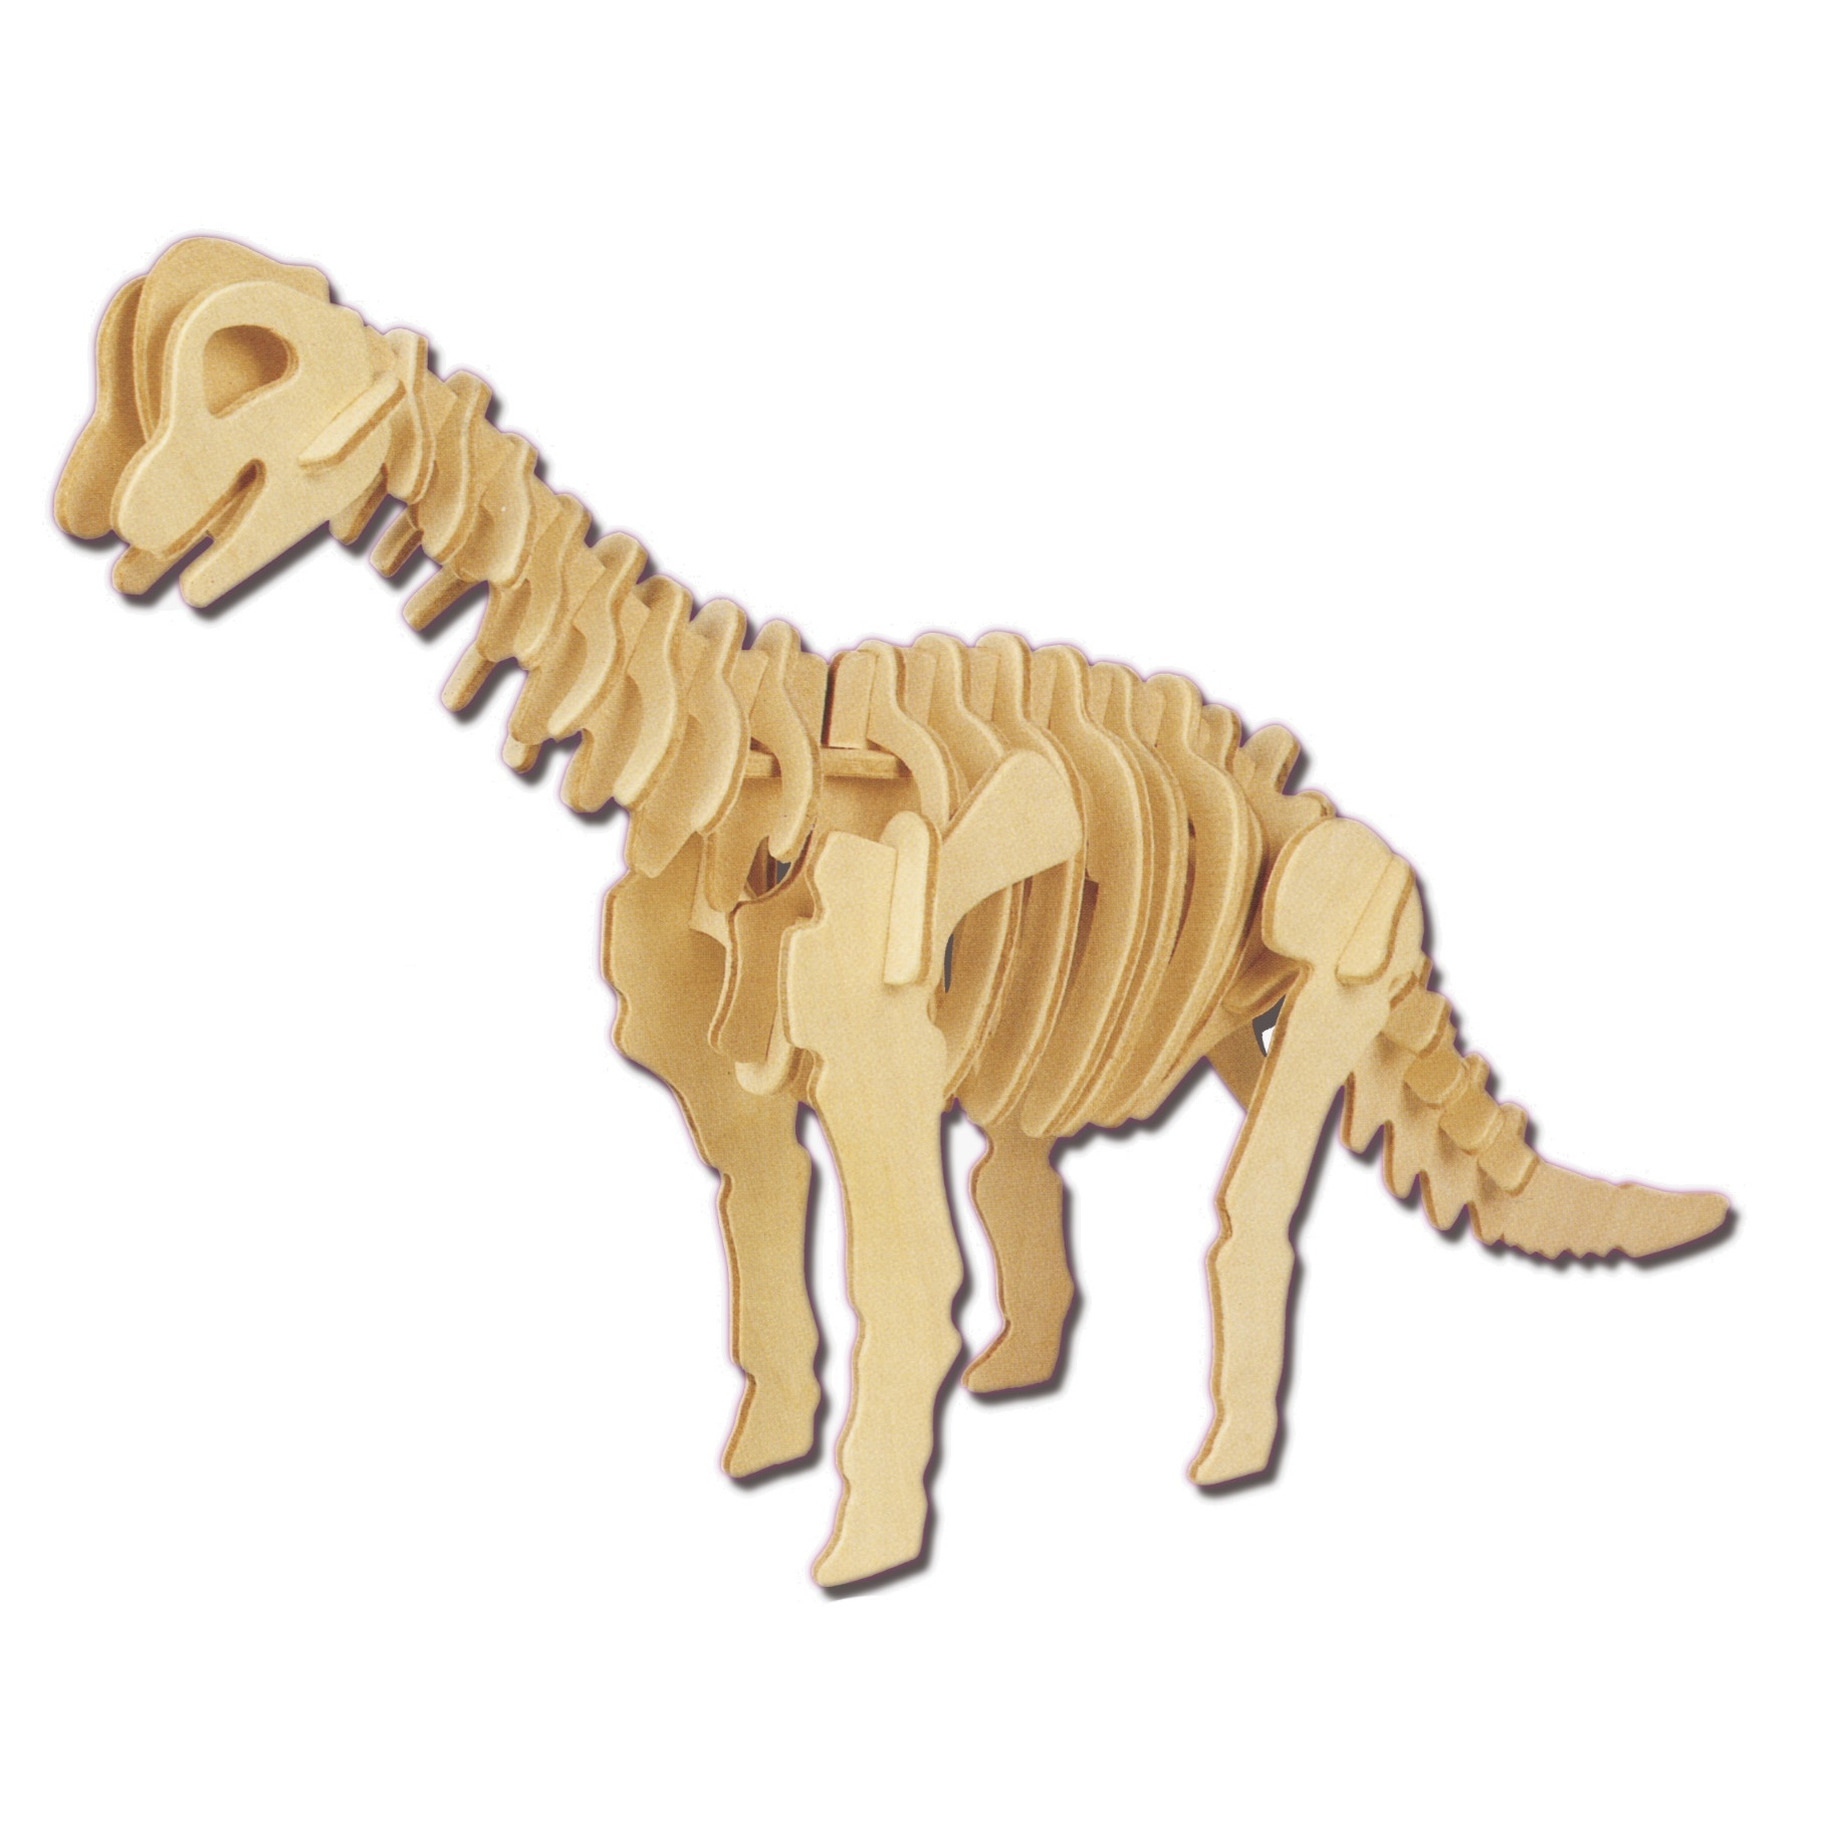 Houten 3D puzzel brachiosaurus dinosaurus 23 cm